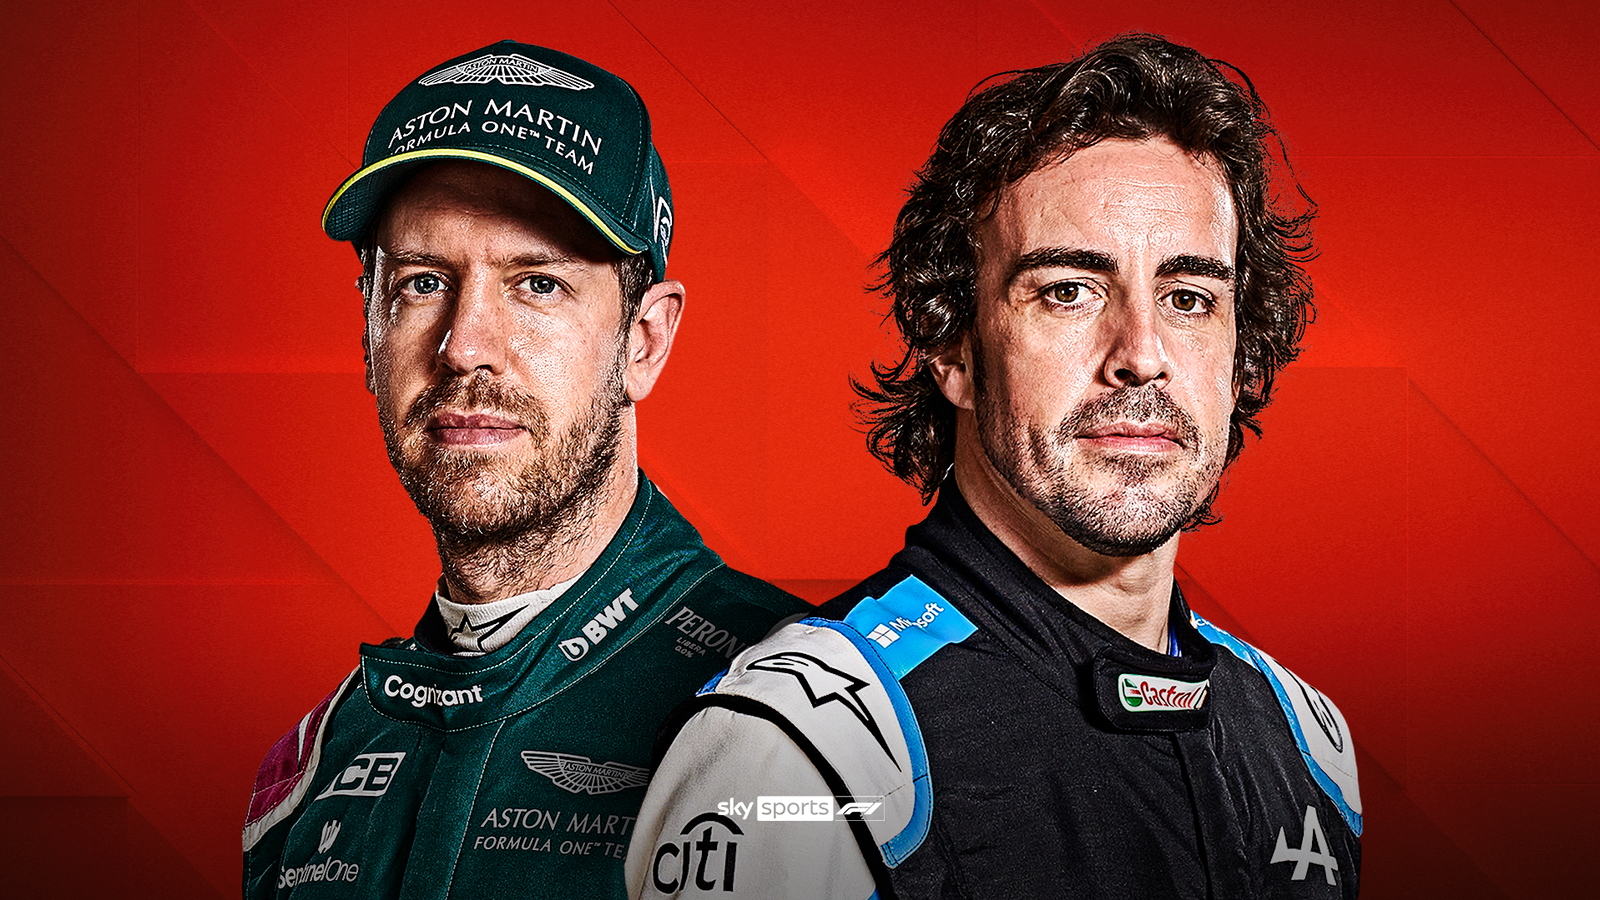 Sebastian Vettel and Fernando Alonso: Assessing the prospects for 2021 as F1 images begin new eras